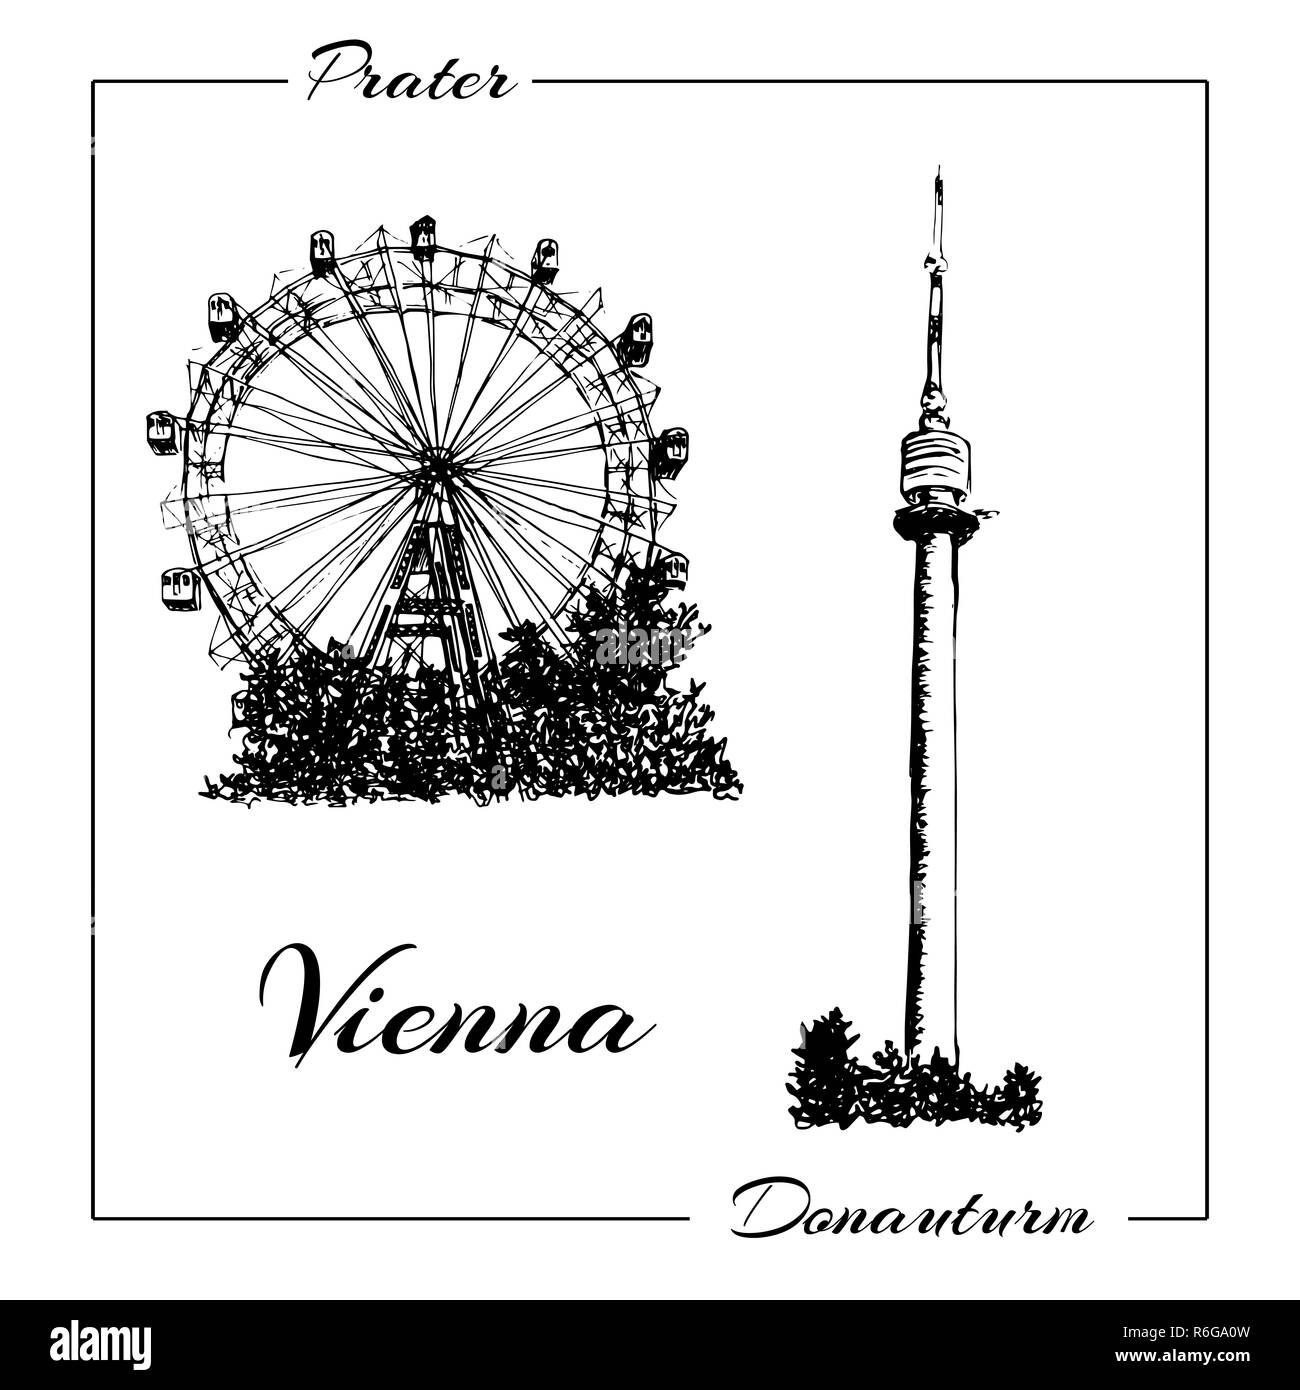 Vienna symbol. Vector hand drawn ink pen sketch illustration. Donauturm, Prater Stock Photo